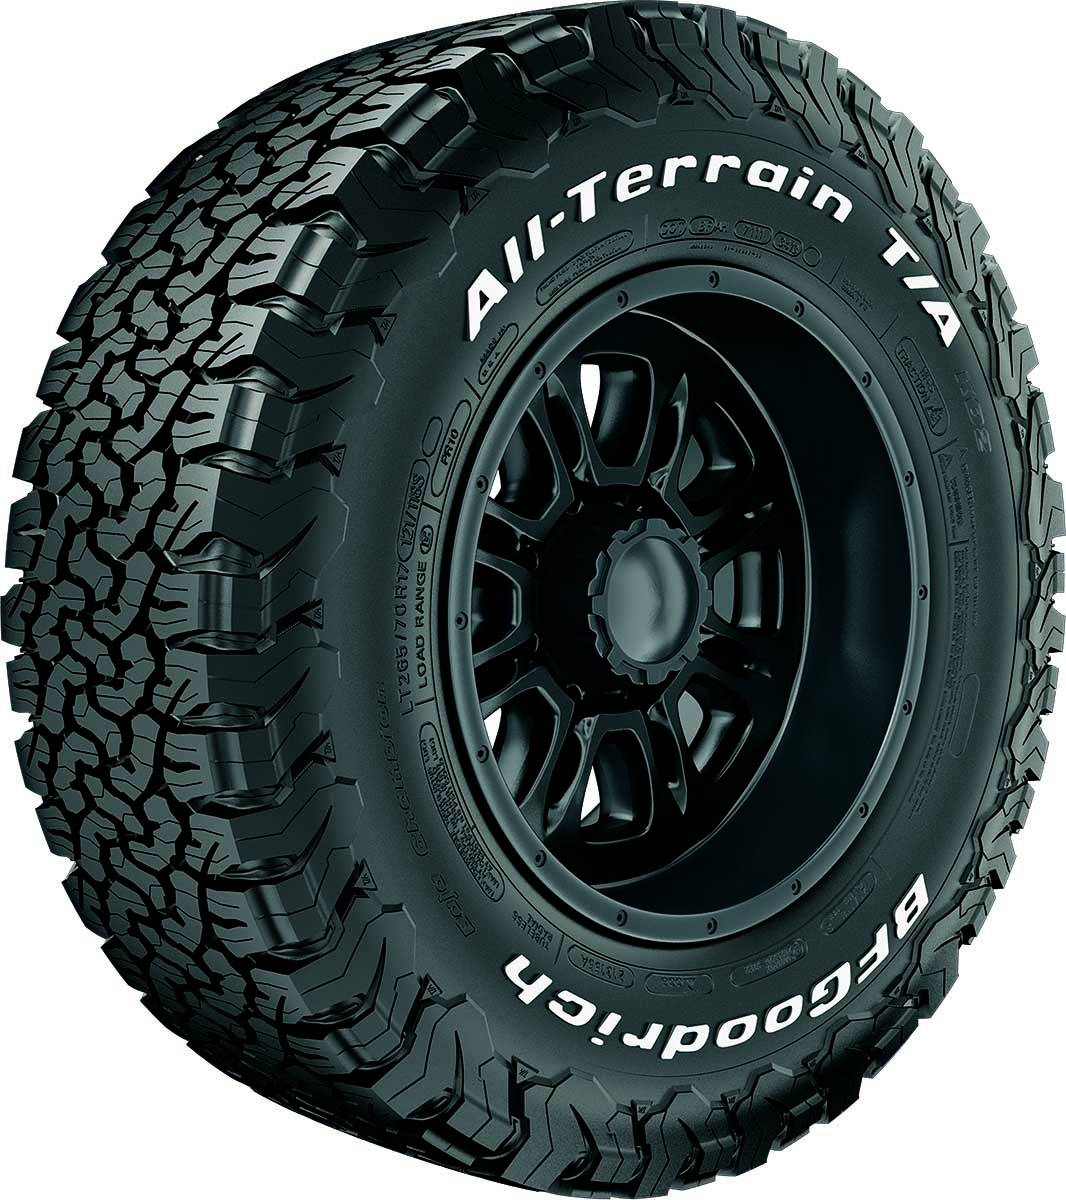 Off-road Tires - Jackson Motorsports Group